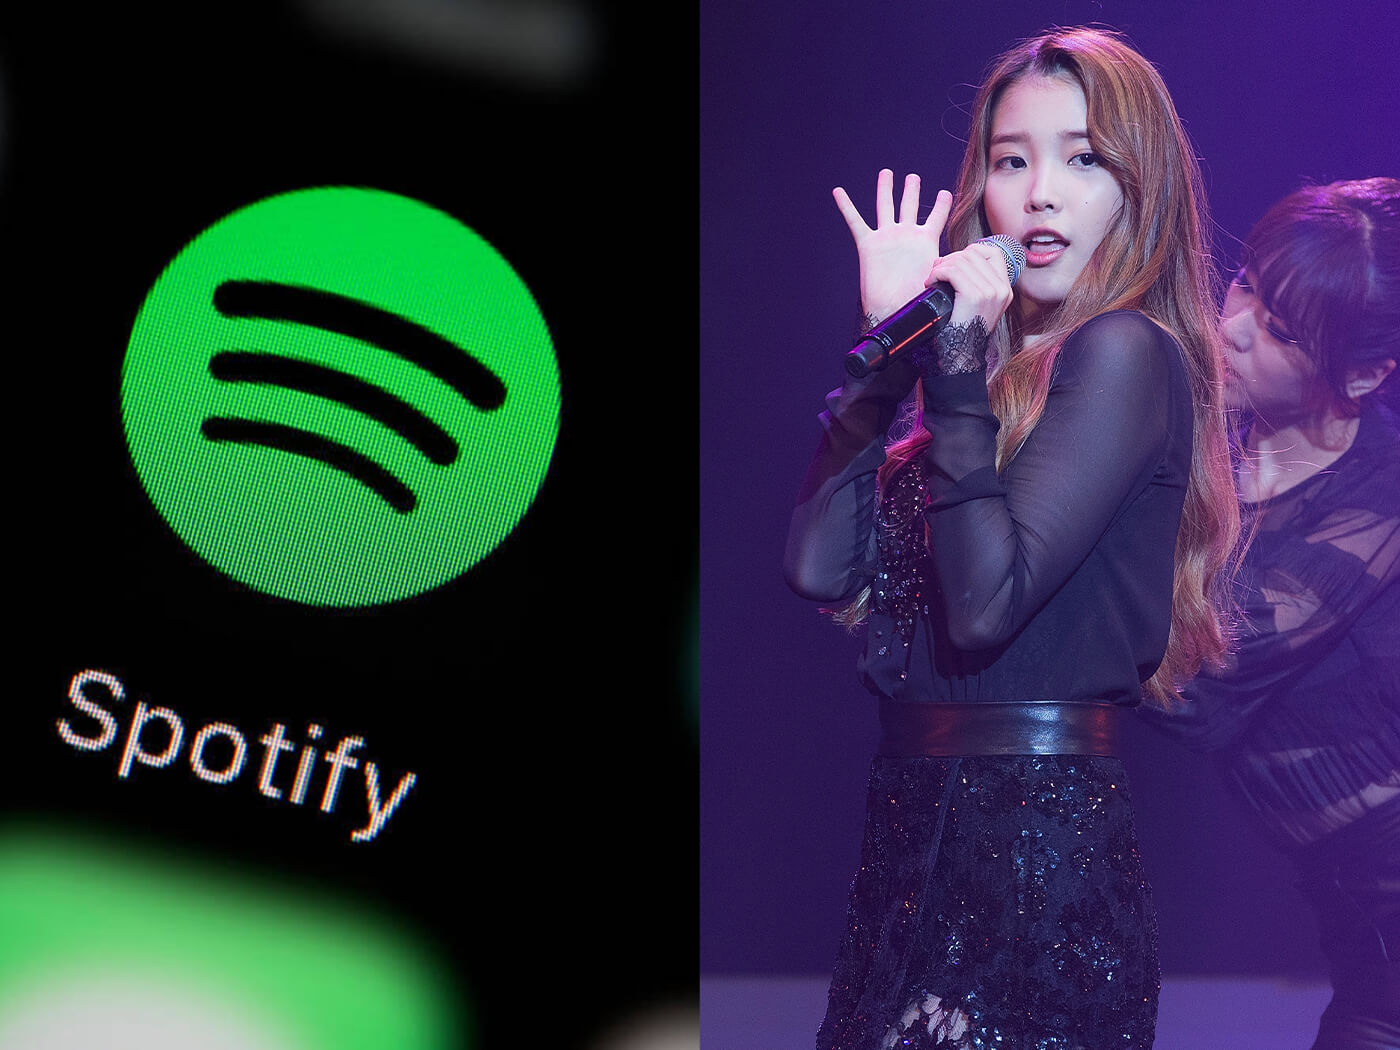 Spotify and K-pop artist IU